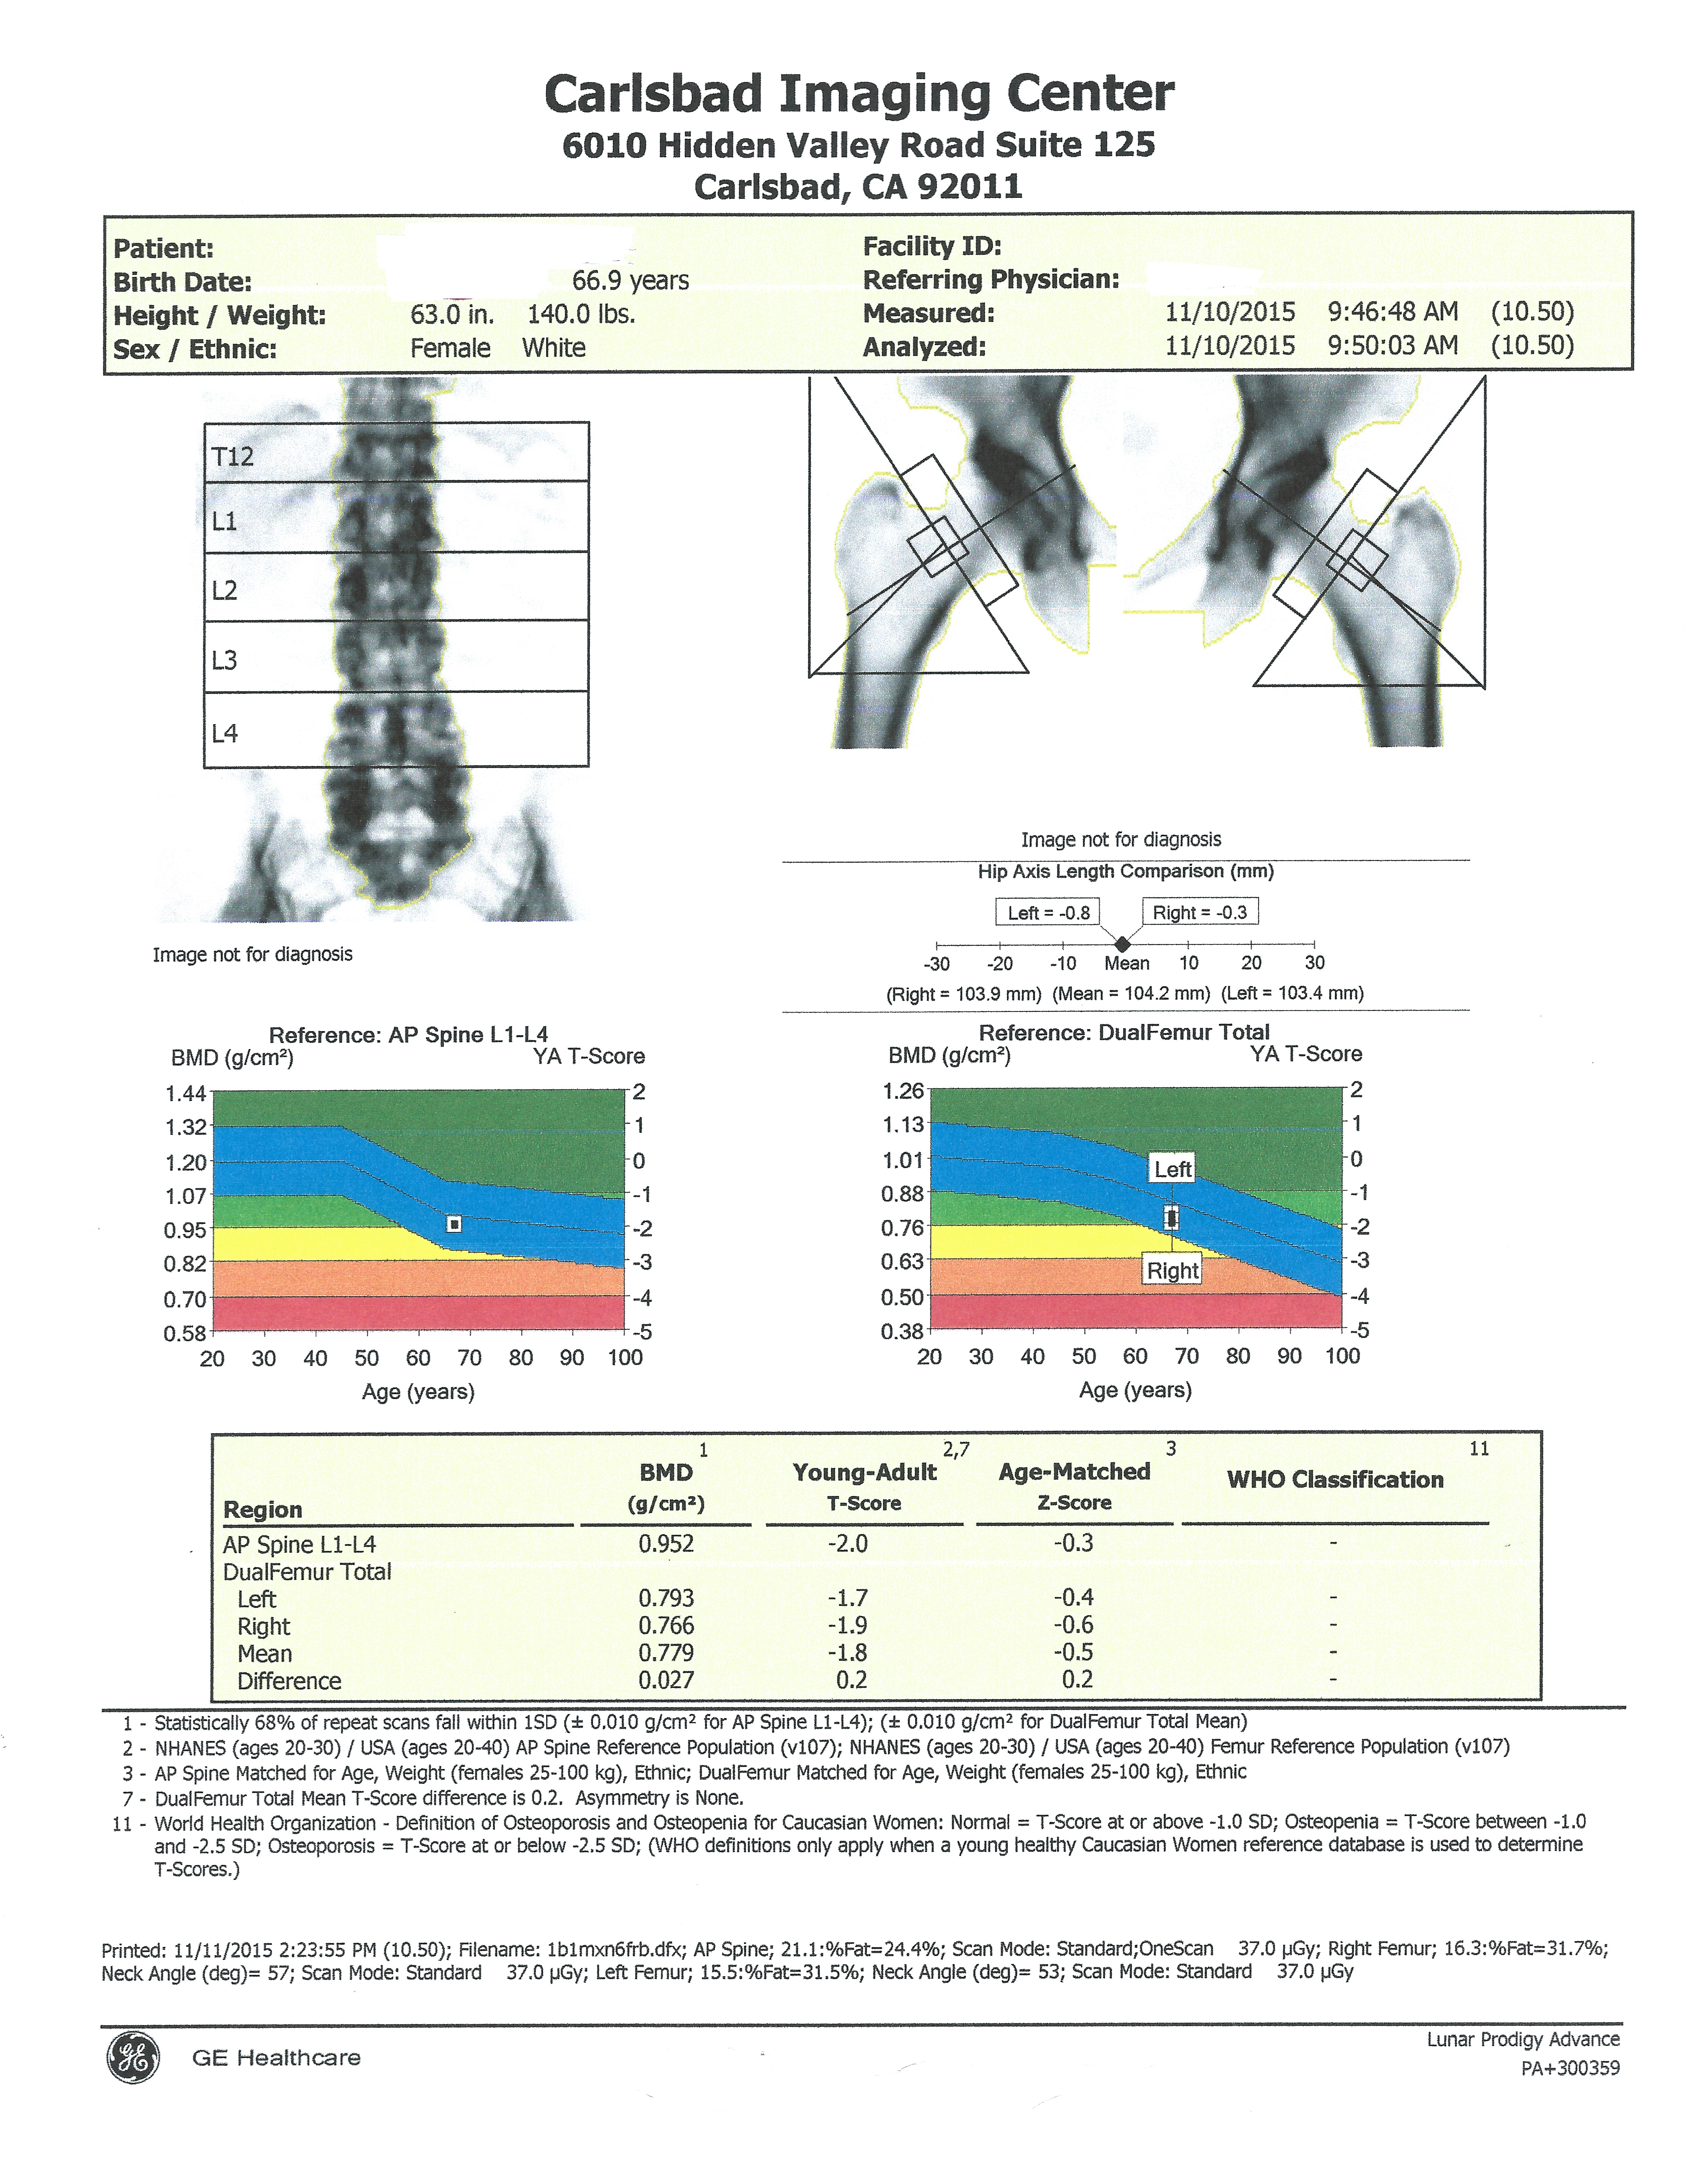 Diagnosis - DEXA Scan - Bone Density Scan